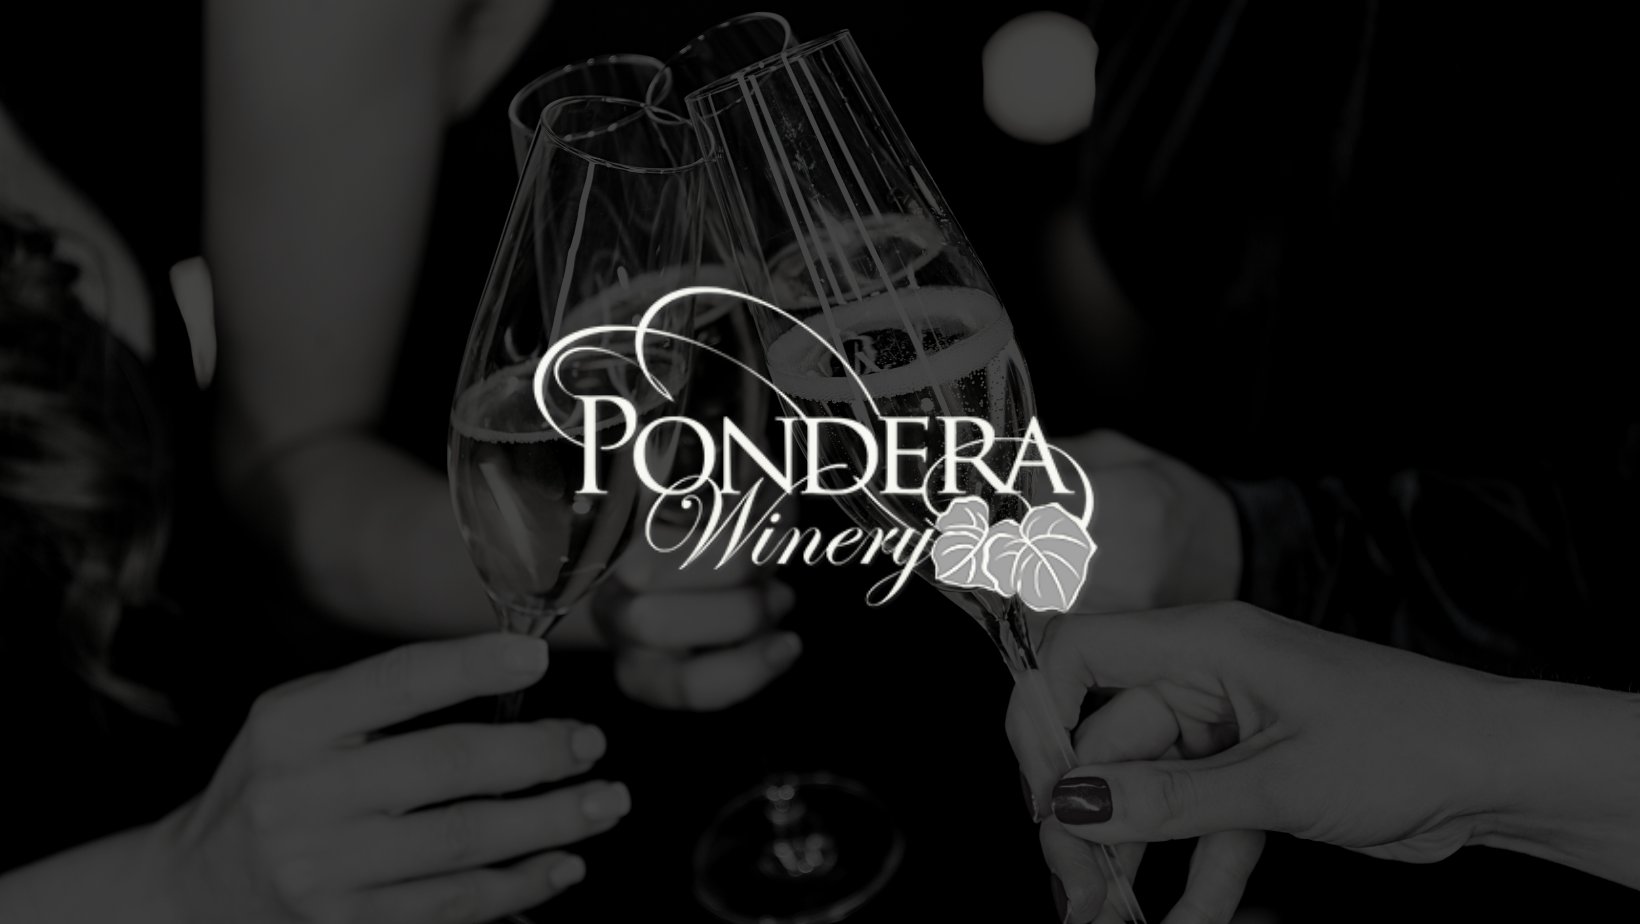 Pondera Winery